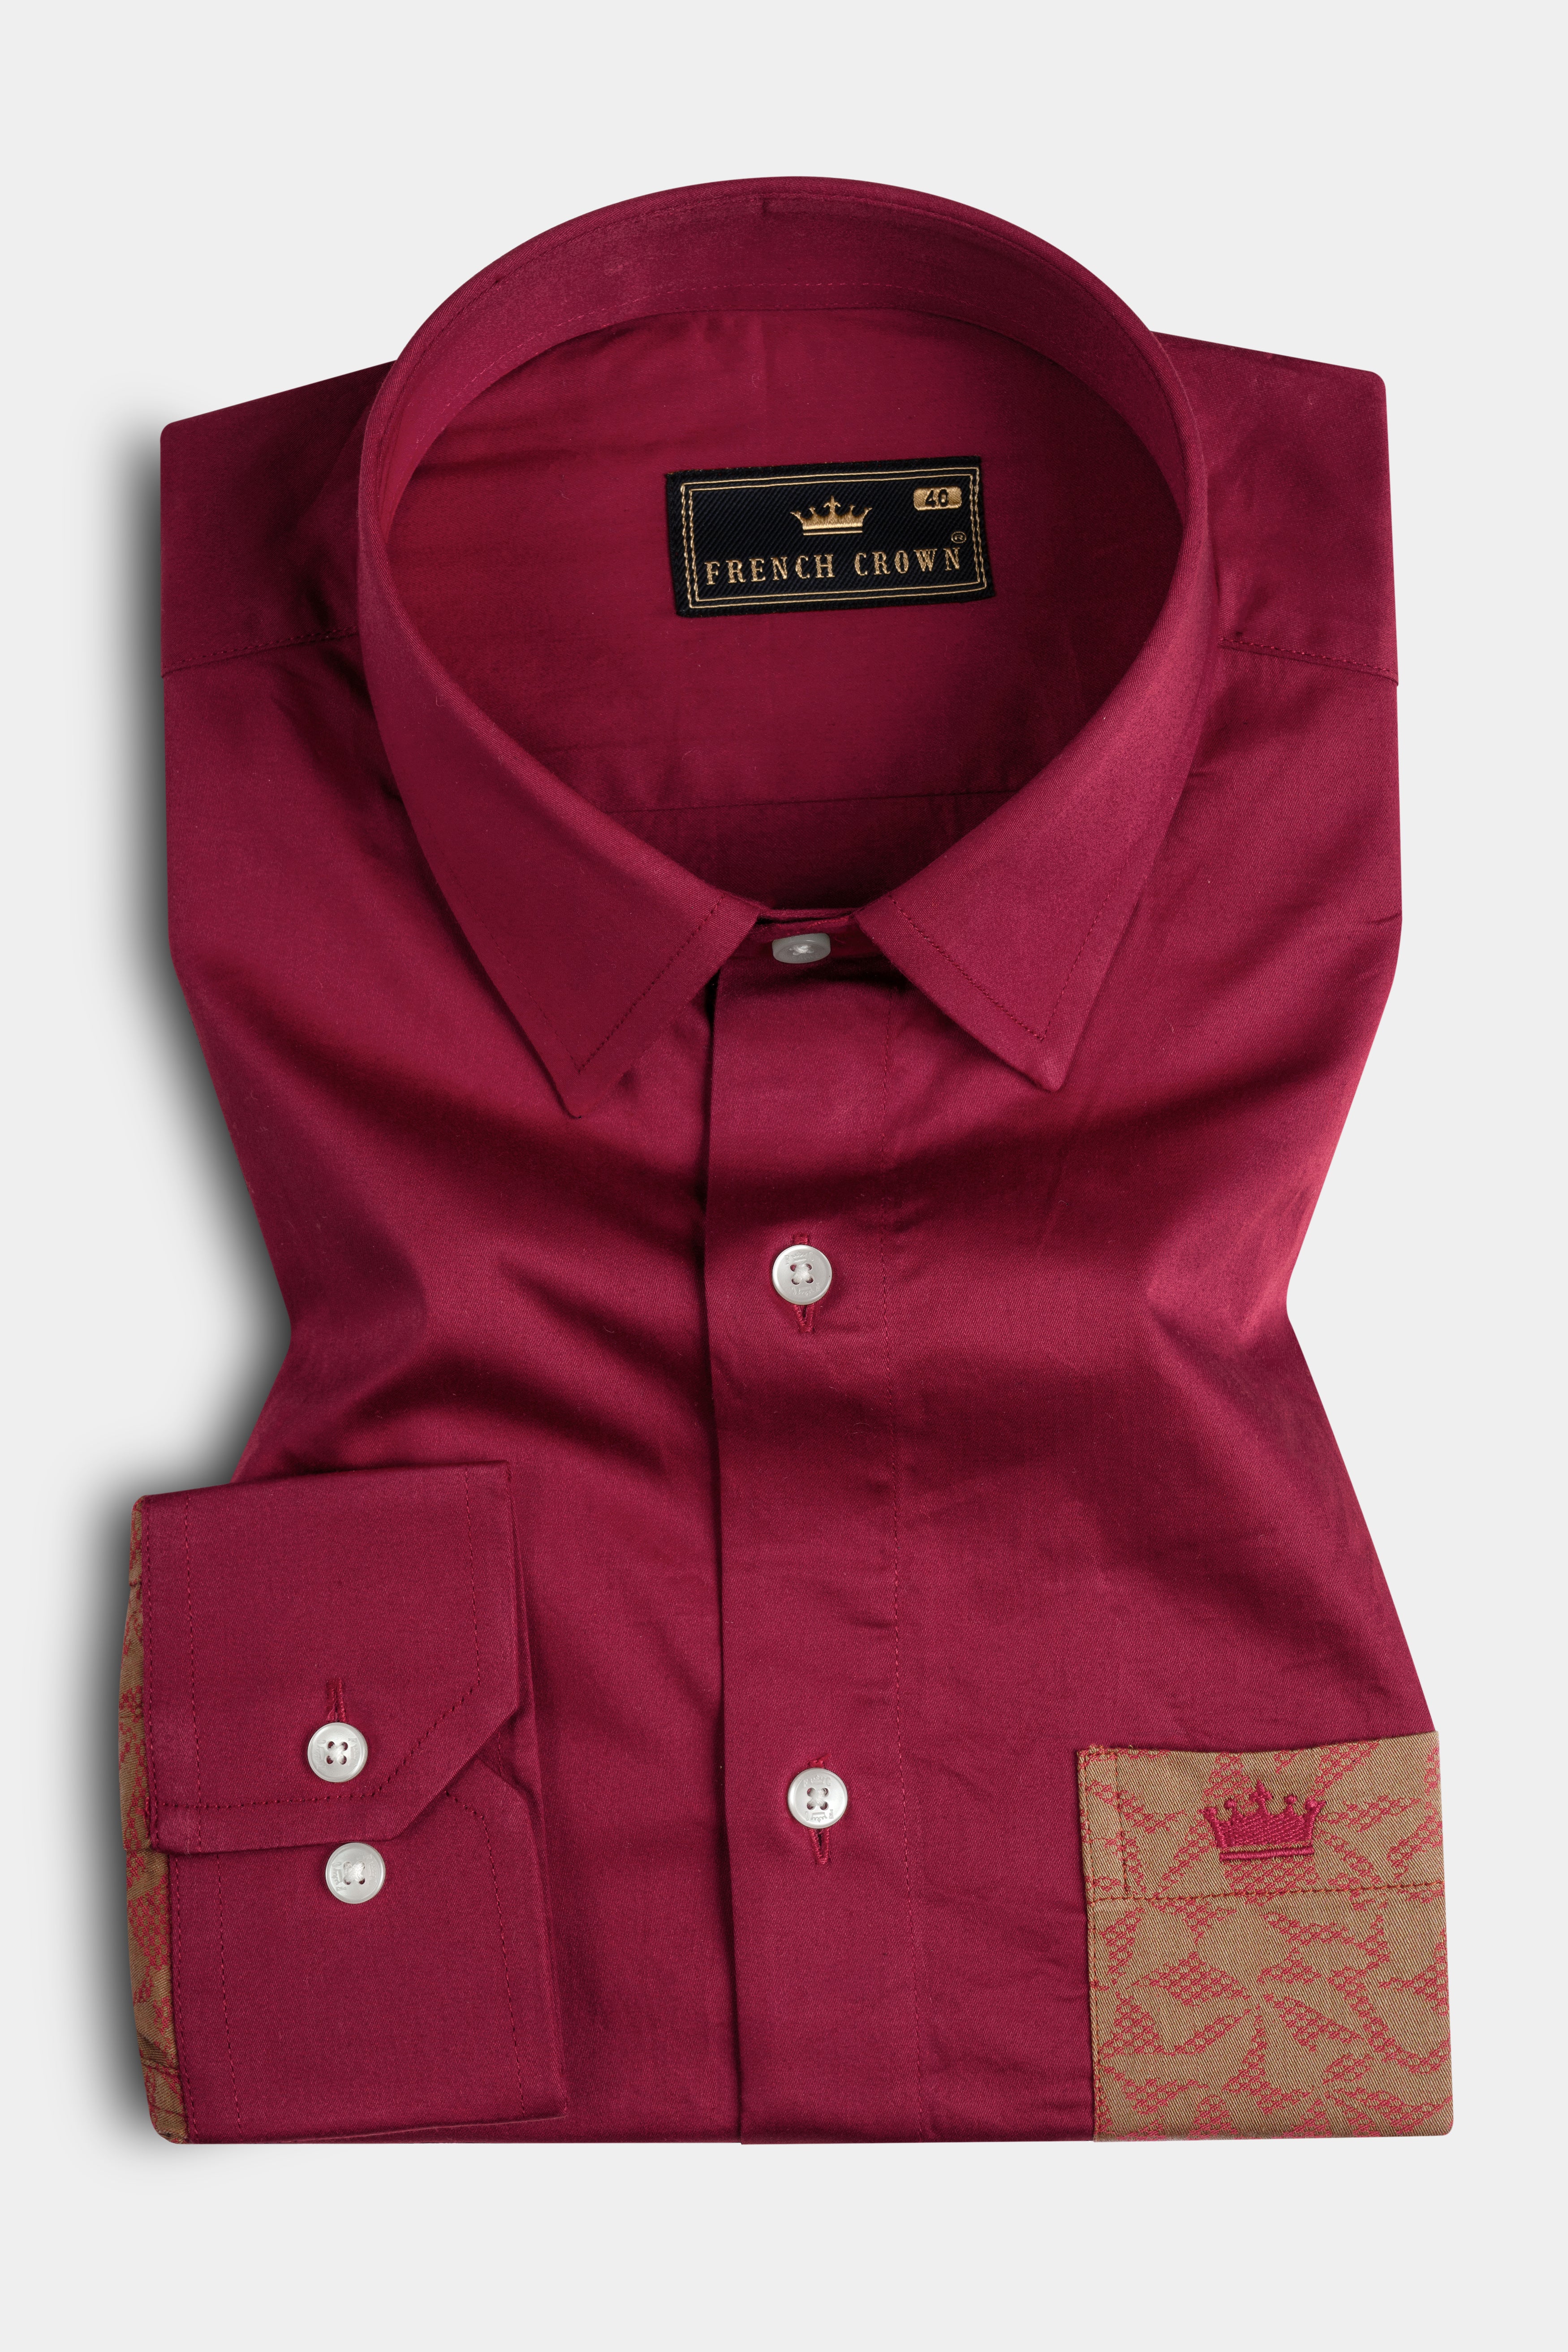 Claret Red with Antique Brass Super Soft Premium Cotton Designer Shirt